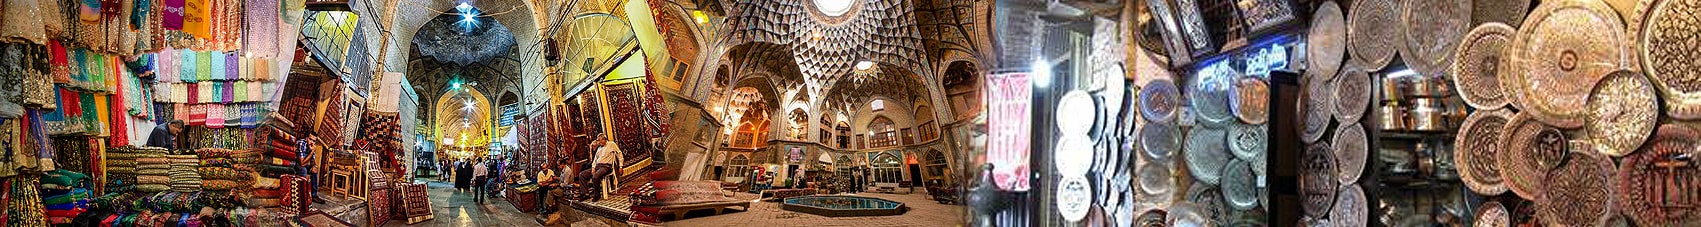 Iranian Market